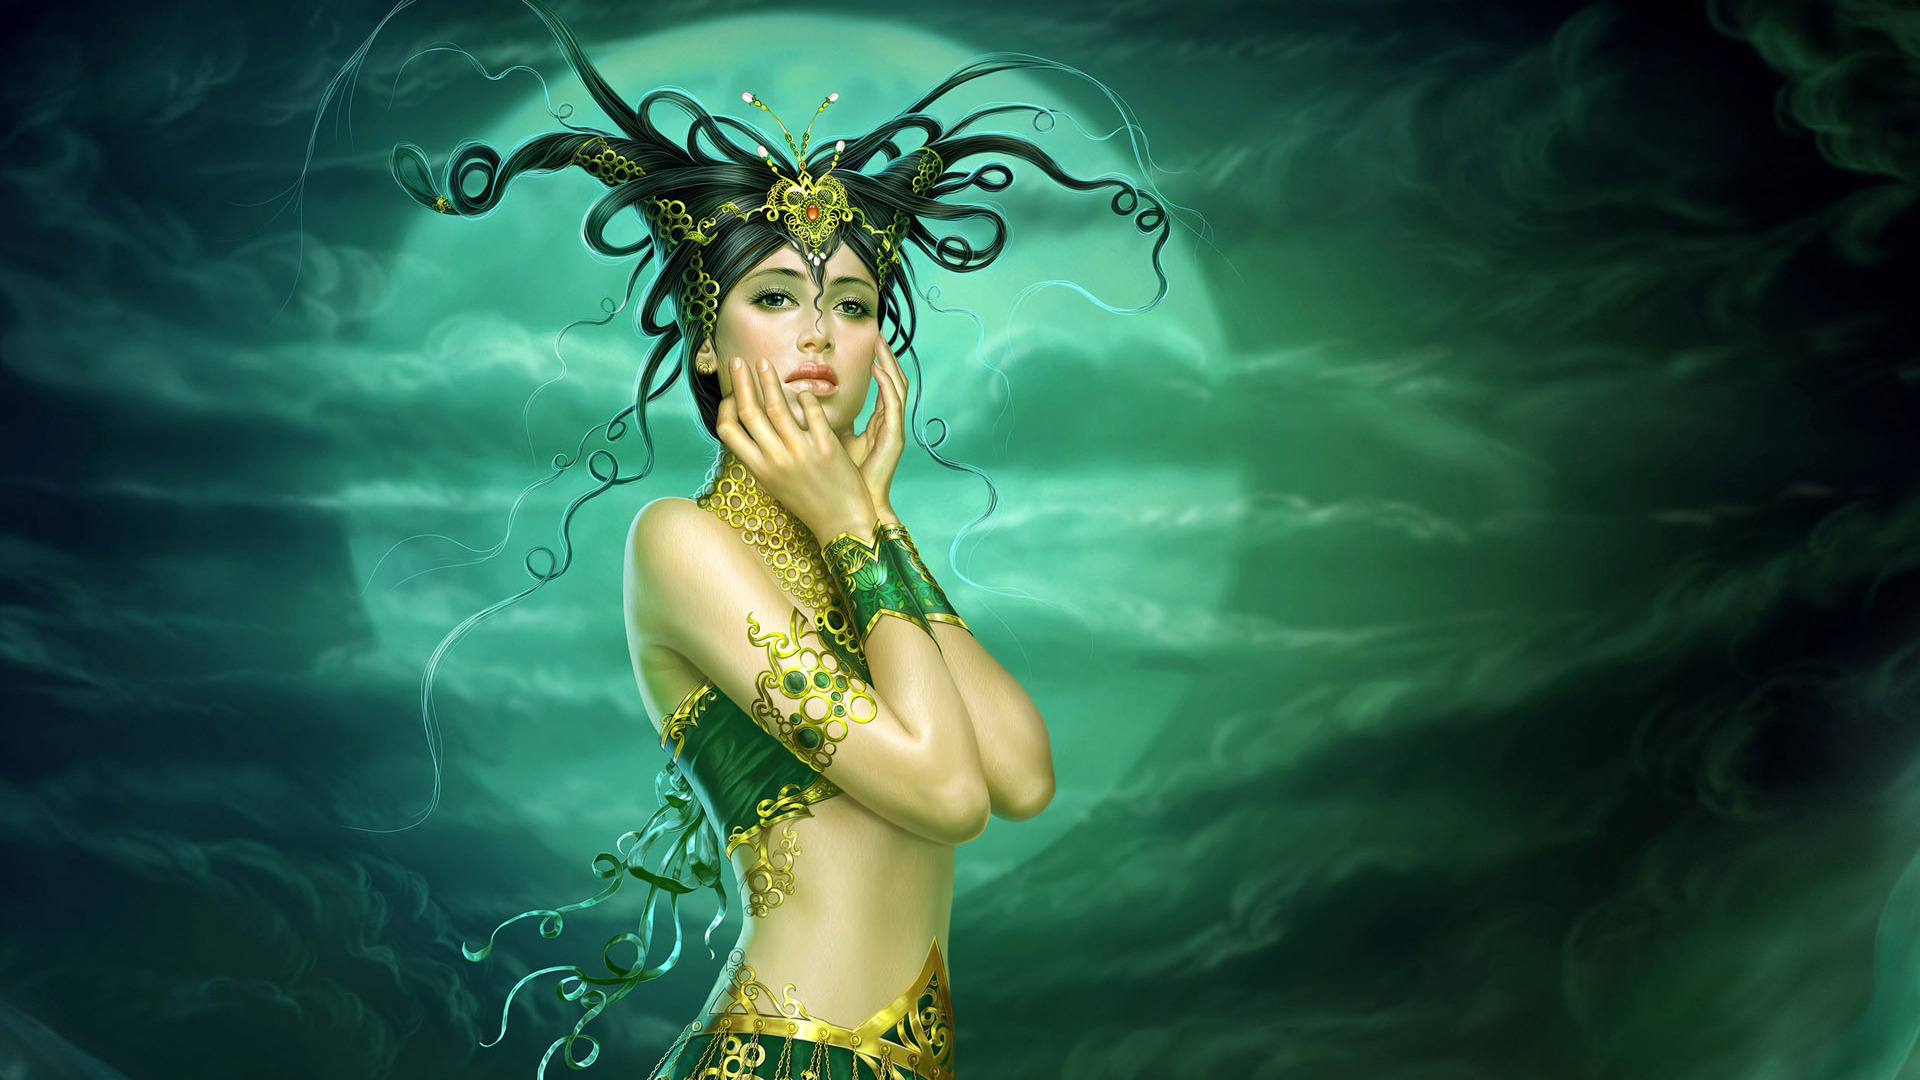 Fantasy Medusa HD Wallpaper by Raymond Swanland